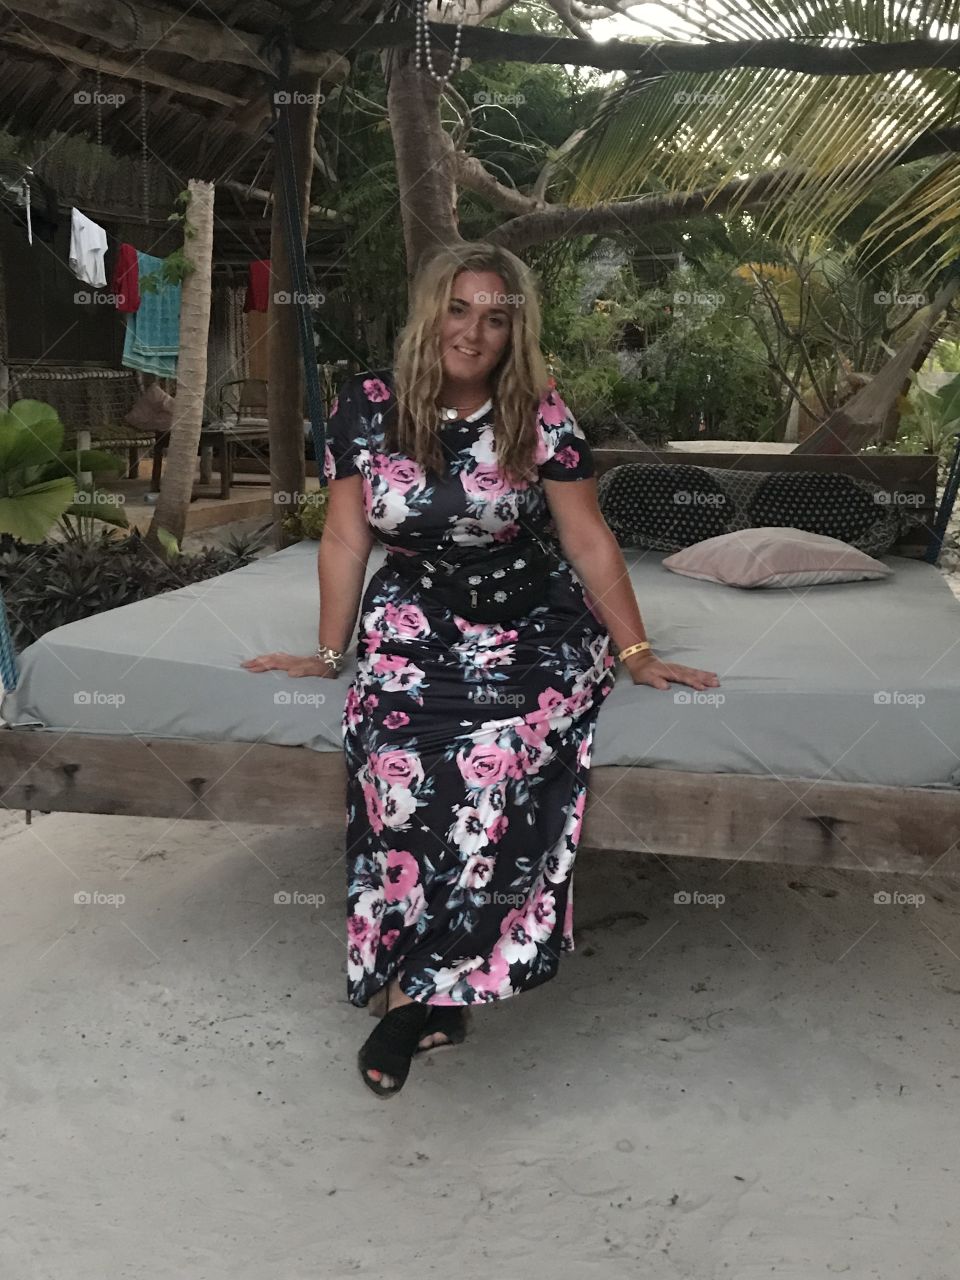 Just swinging in Zanzibar